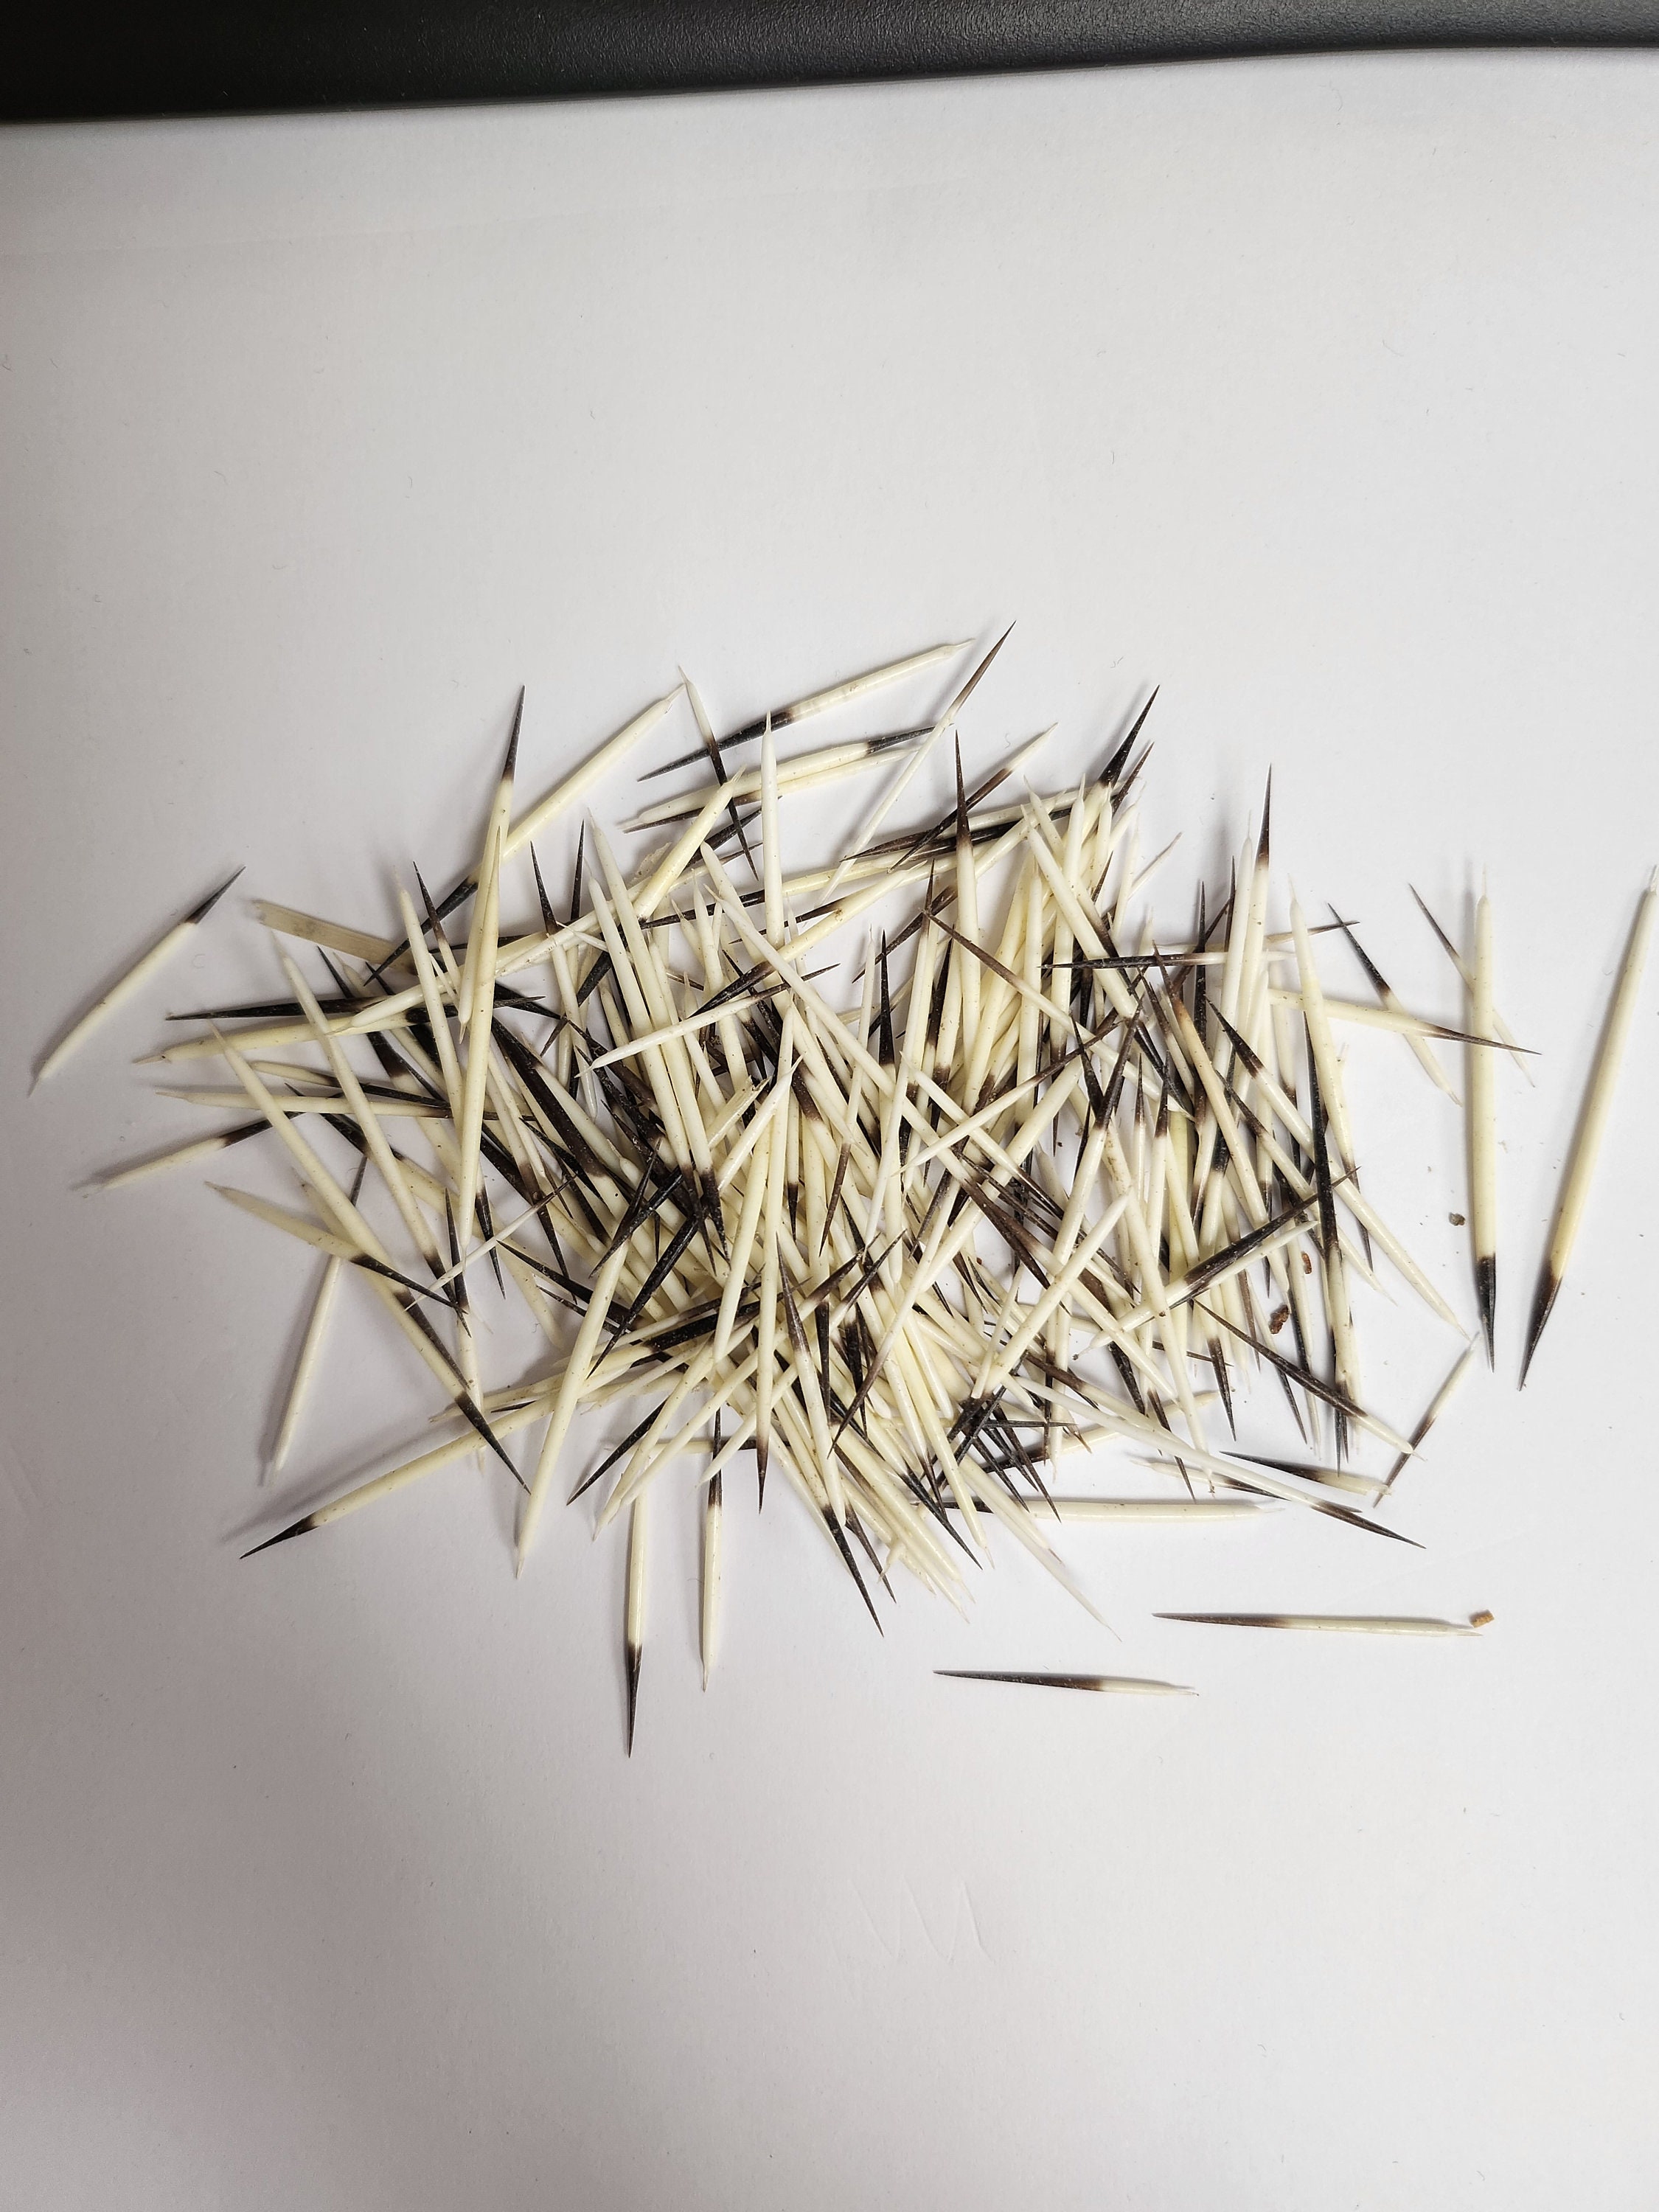 porcupine quills art